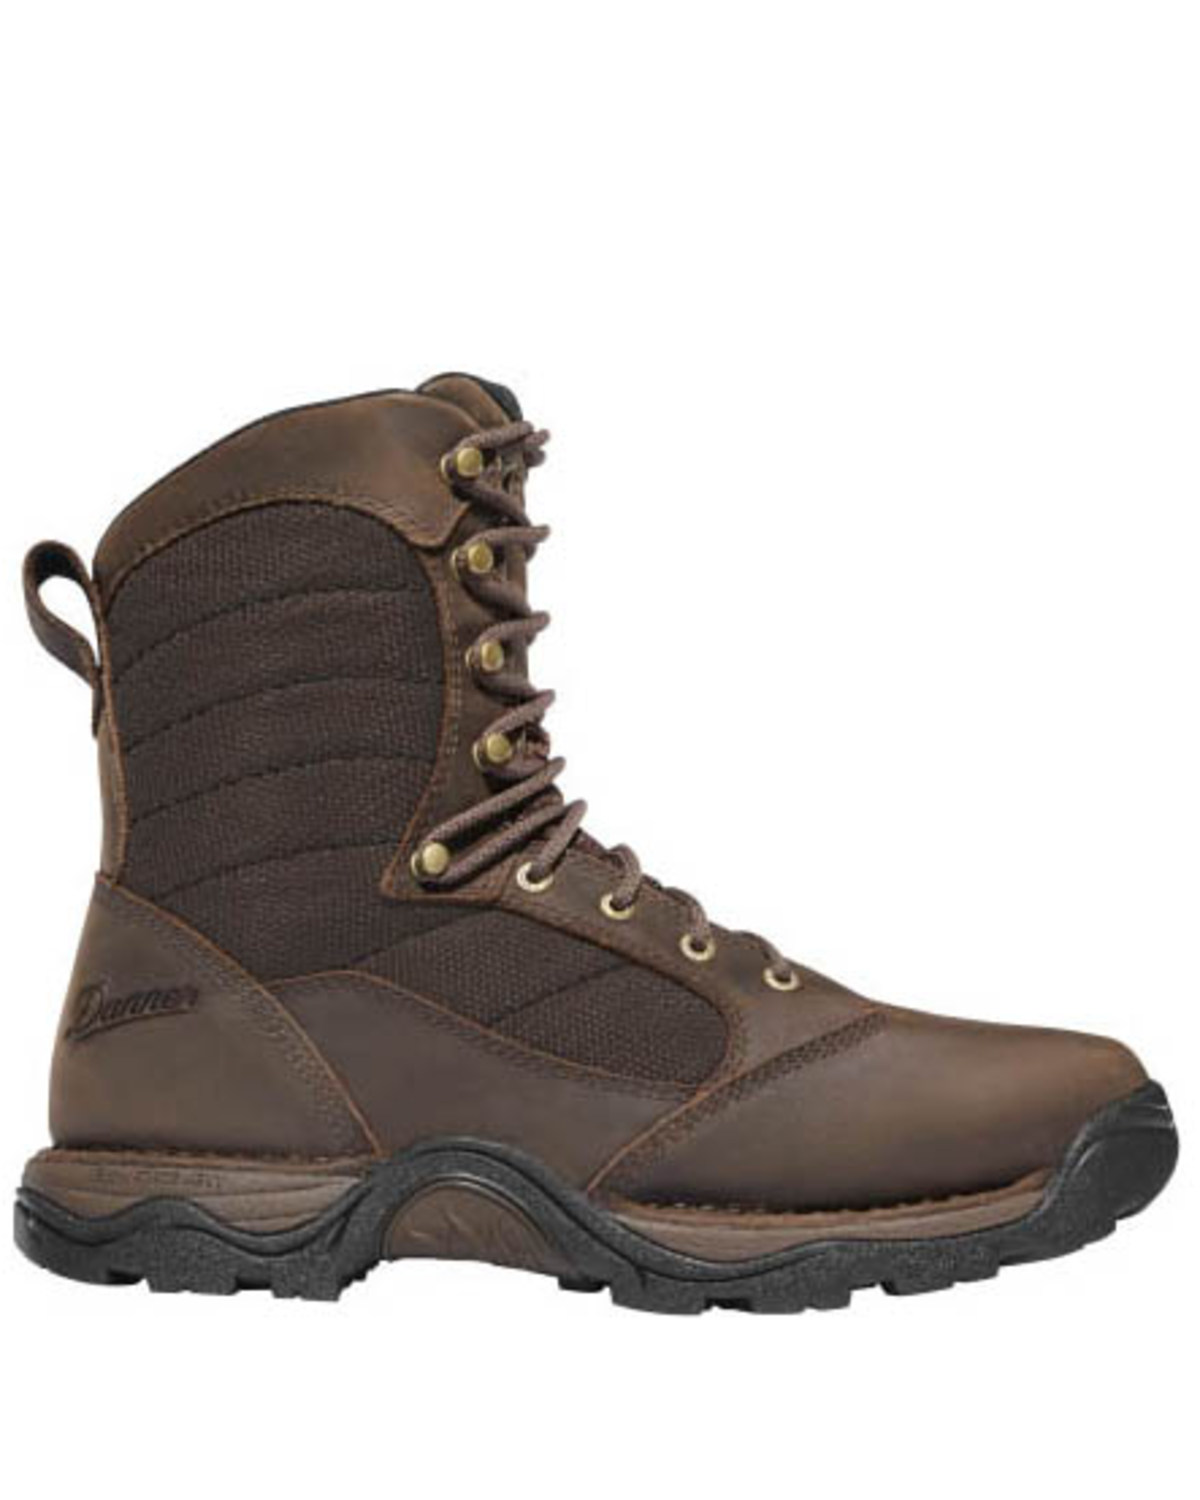 Danner Men's Pronghorn Work Boots - Soft Toe | Boot Barn